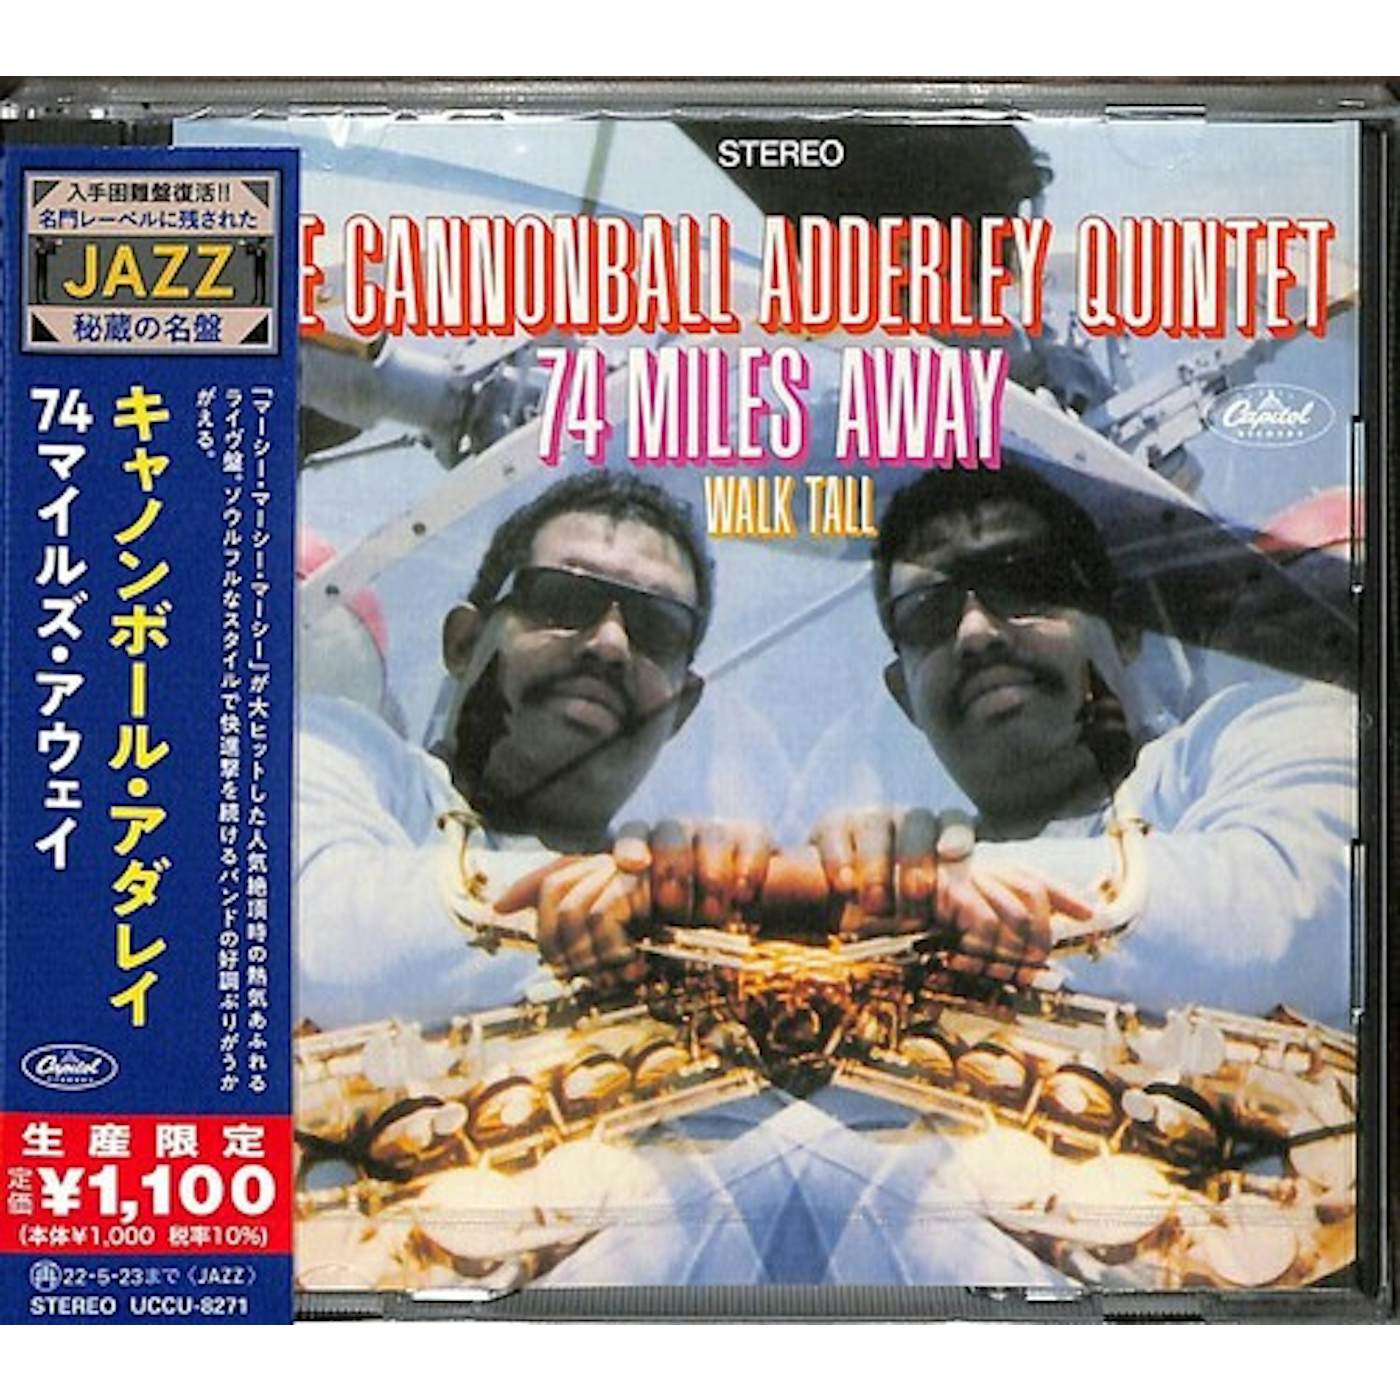 Cannonball Adderley 74 MILES AWAY CD